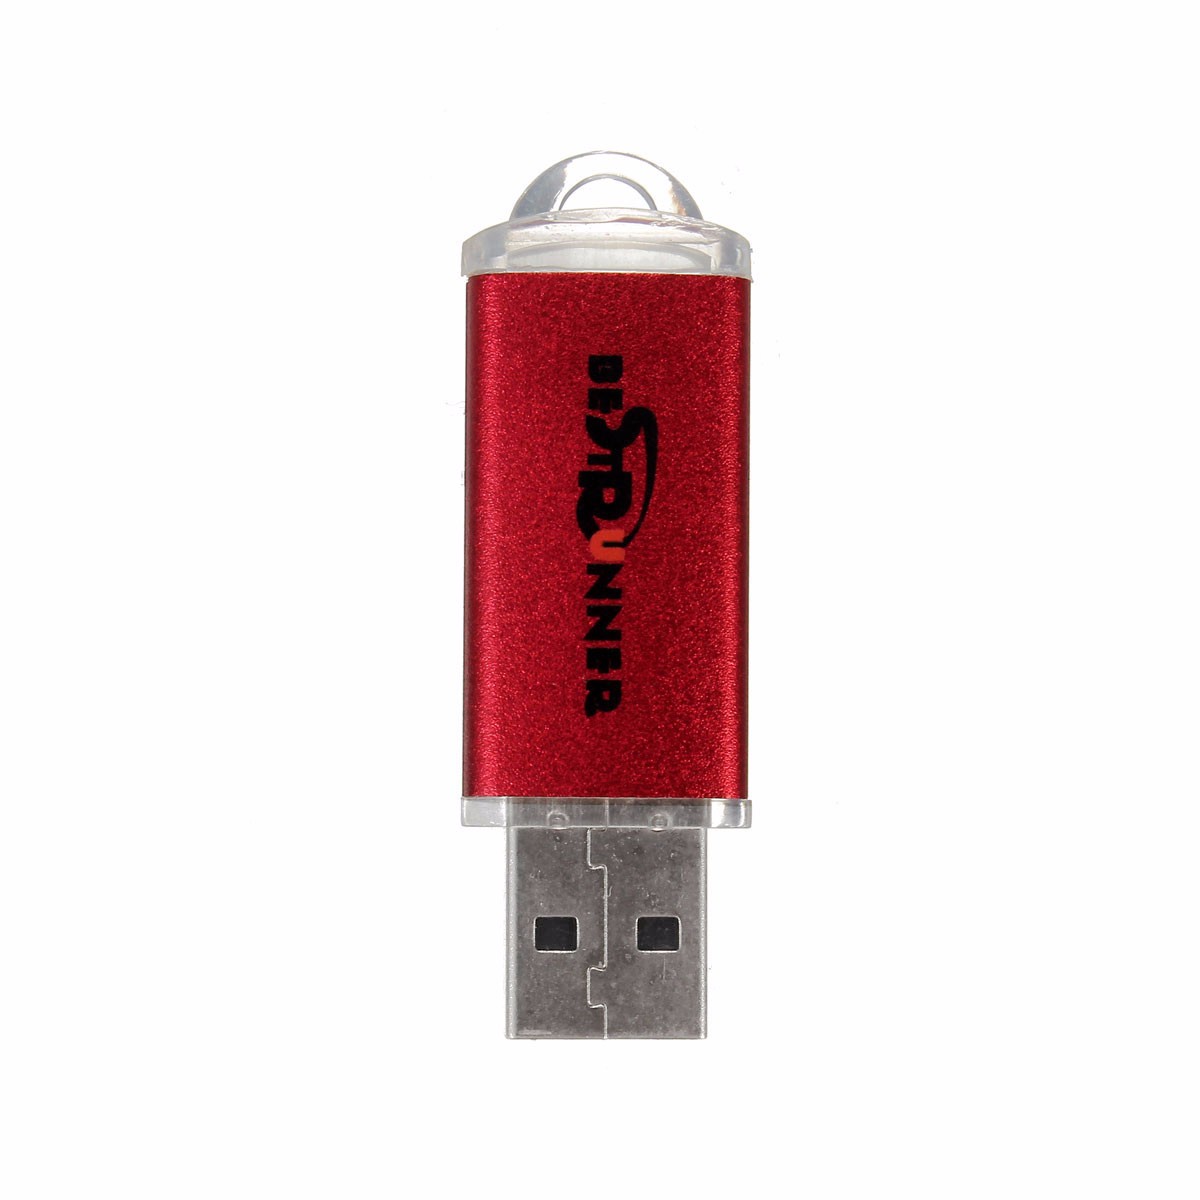 Bestrunner-10Pcs-128MB-USB-20-Flash-Drive-Candy-Red-Color-Memory-Pen-Storage-Thumb-U-Disk-1939063-3